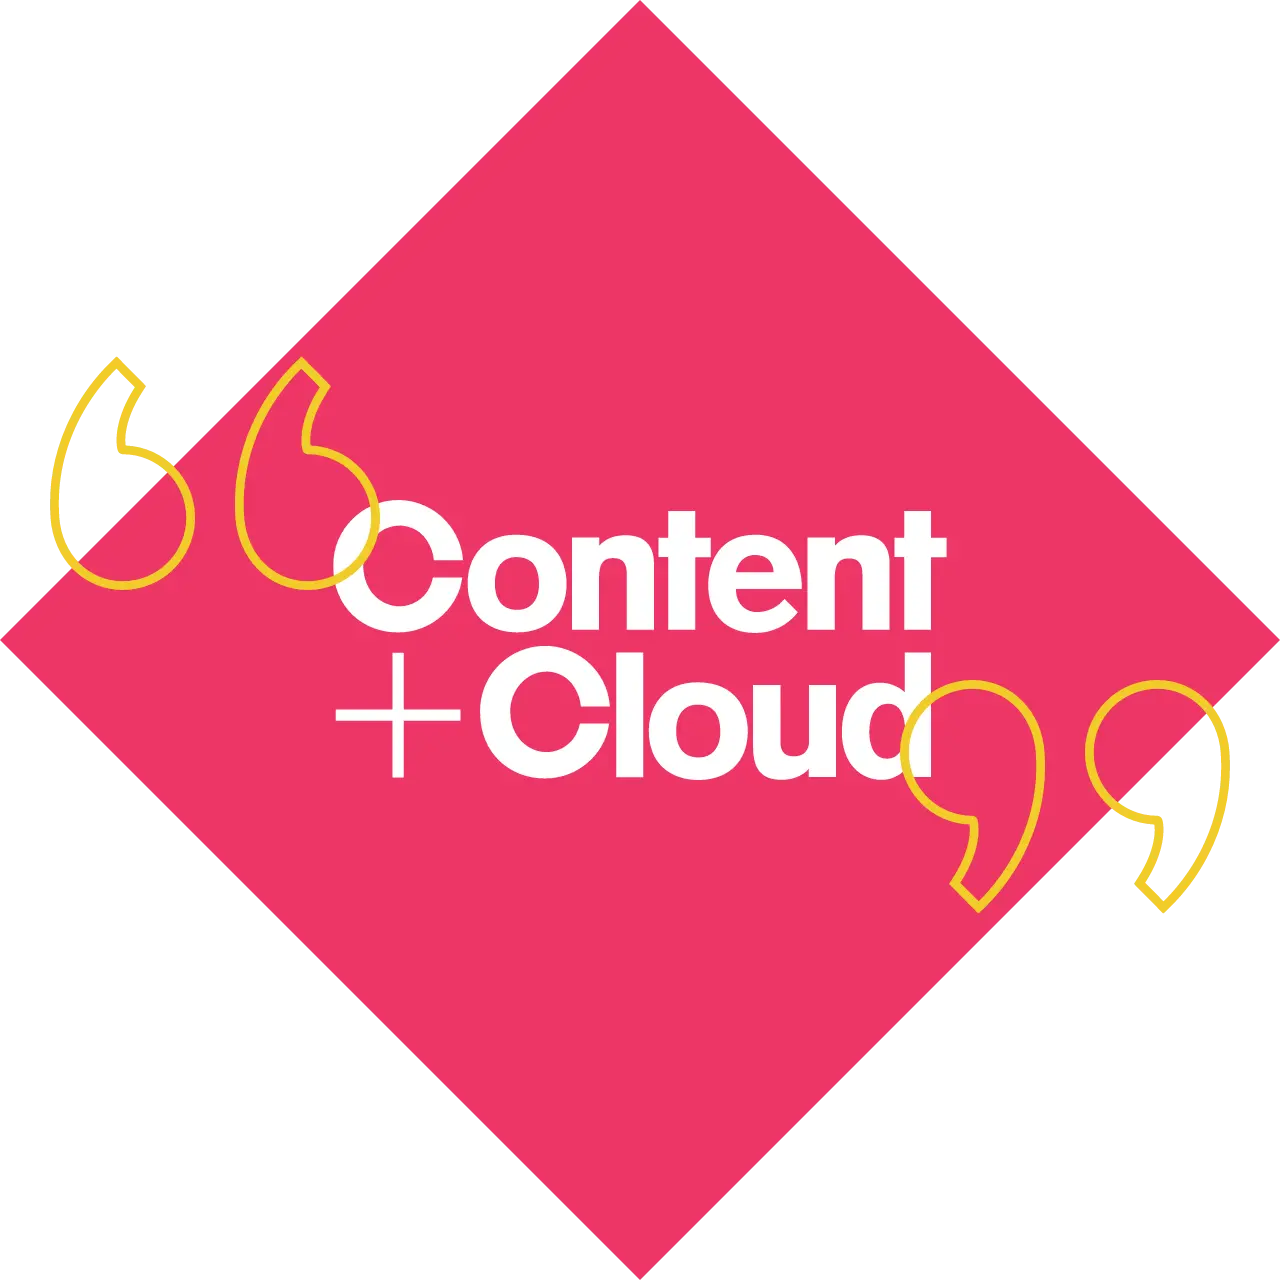 Content+Cloud quote